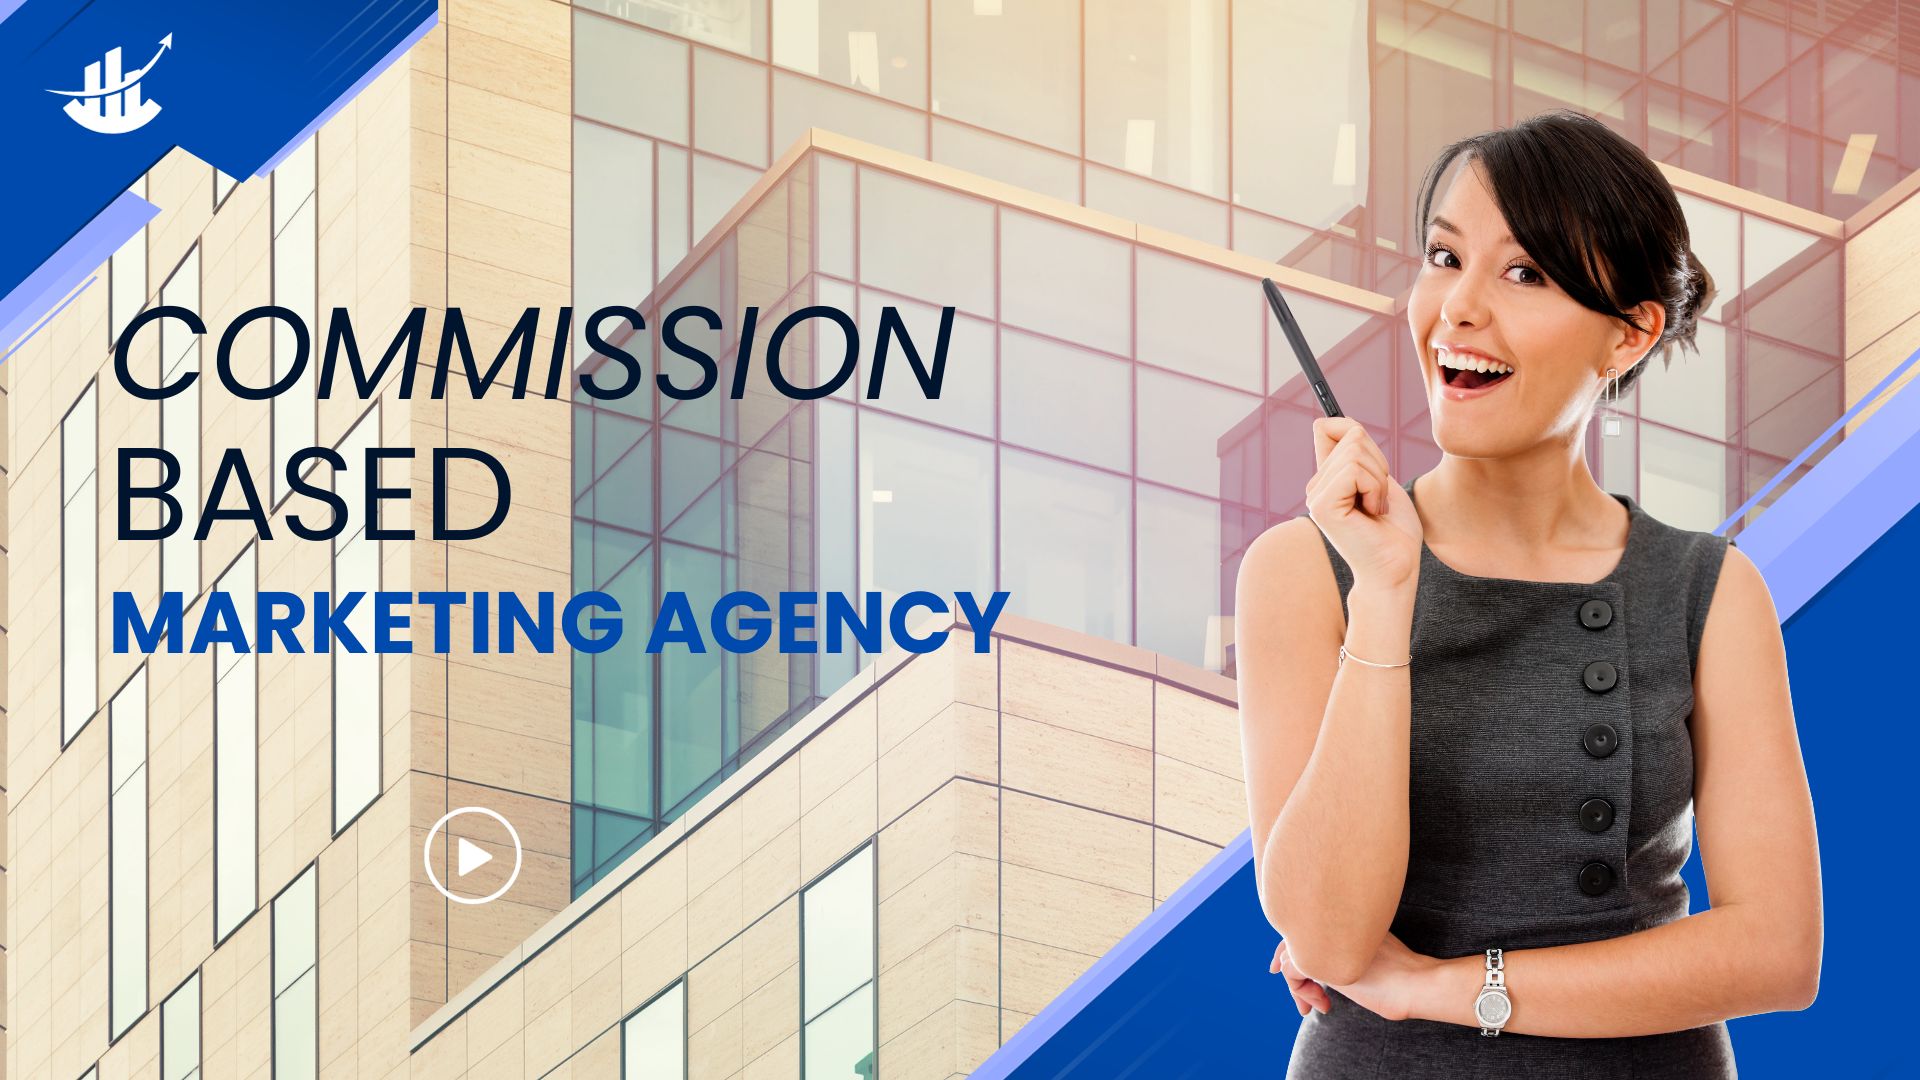 Commission Based Marketing Agency